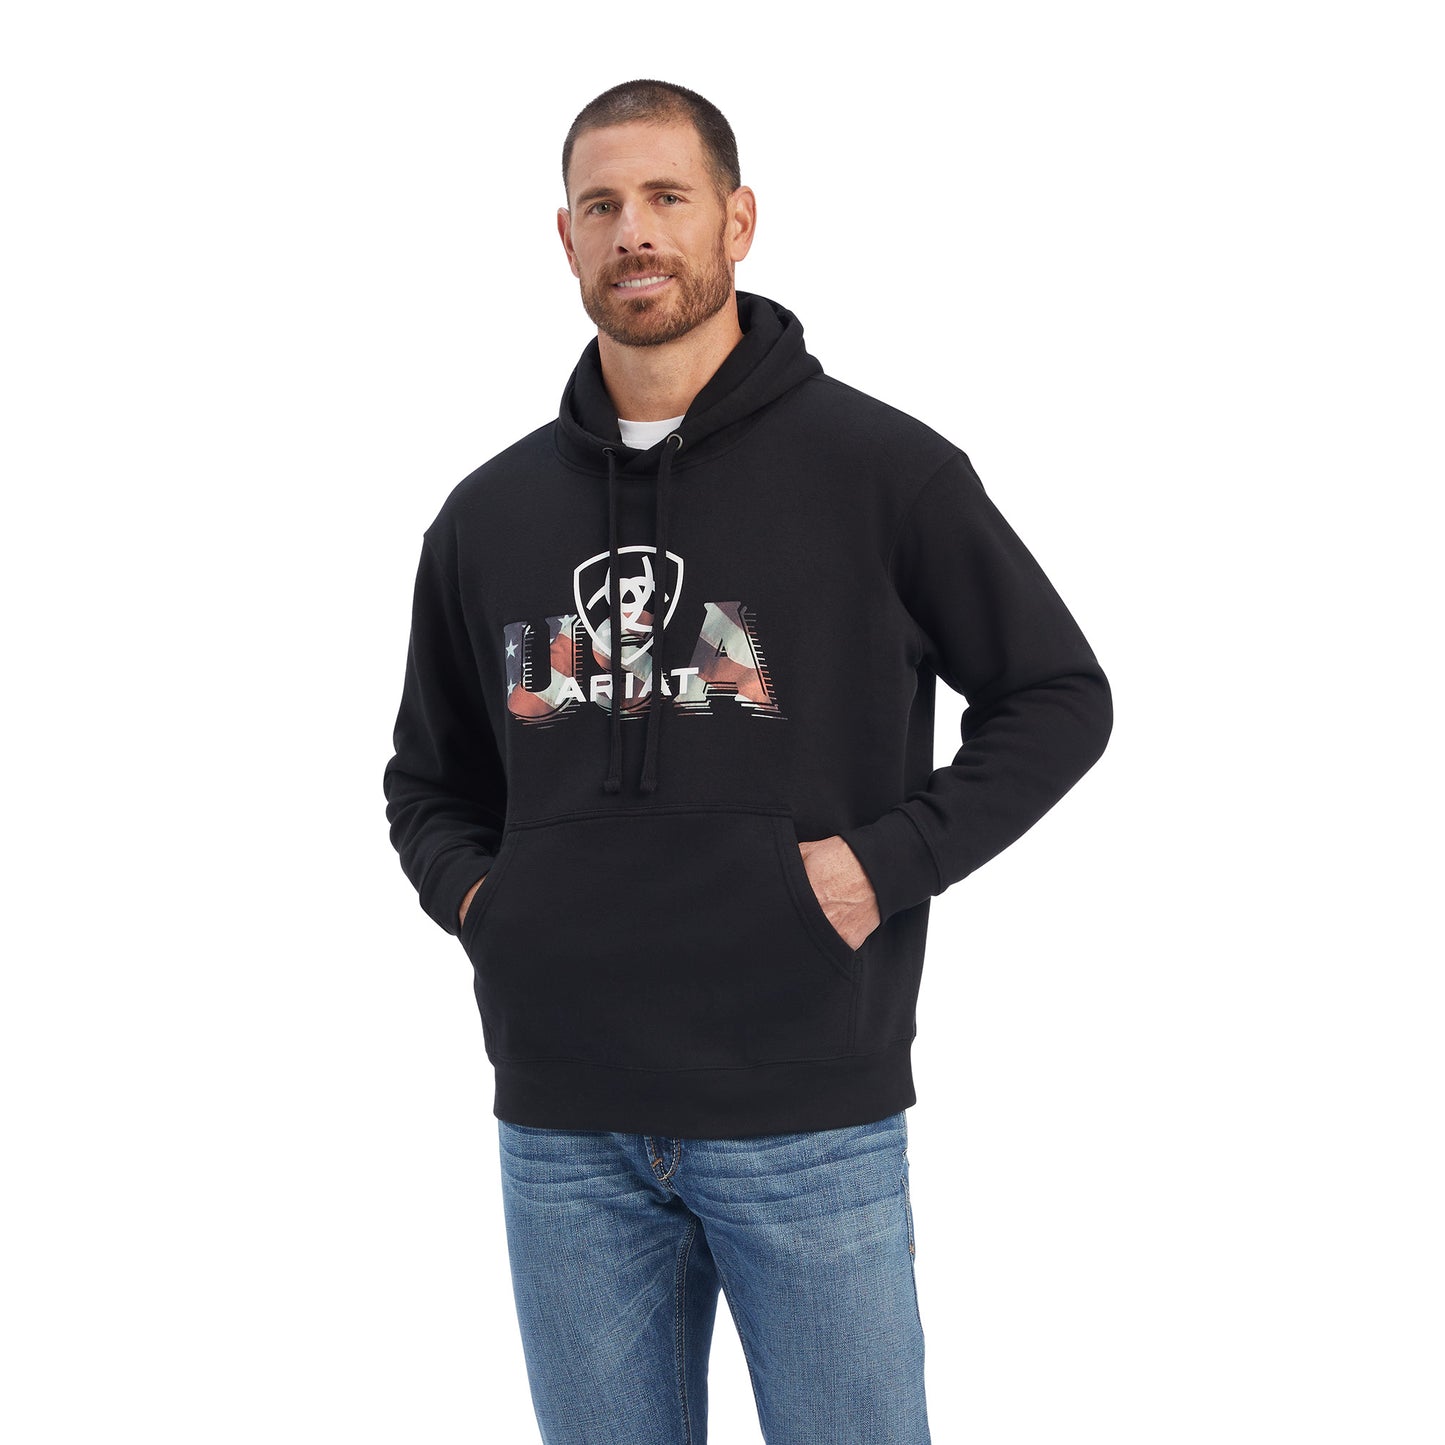 Ariat® Men's USA Proud Black Graphic Hooded Sweatshirt 10041720